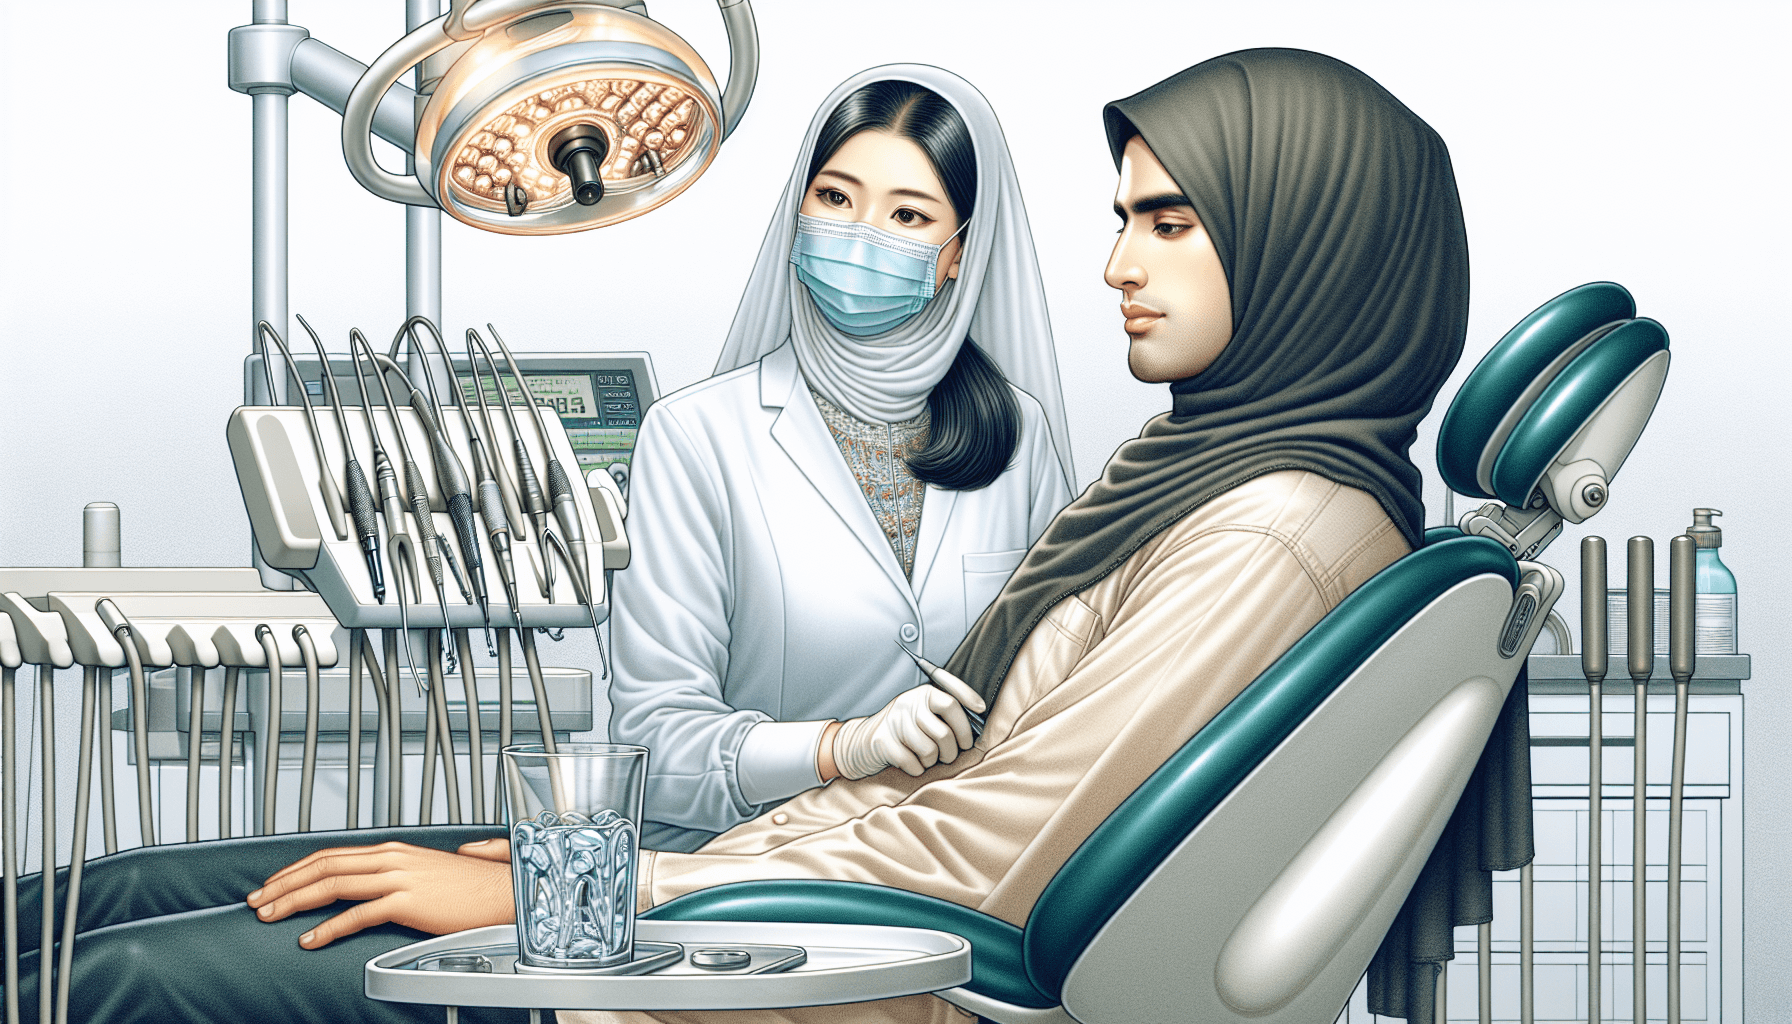 Illustration of a dentist monitoring a patient under oral sedation during a dental procedure